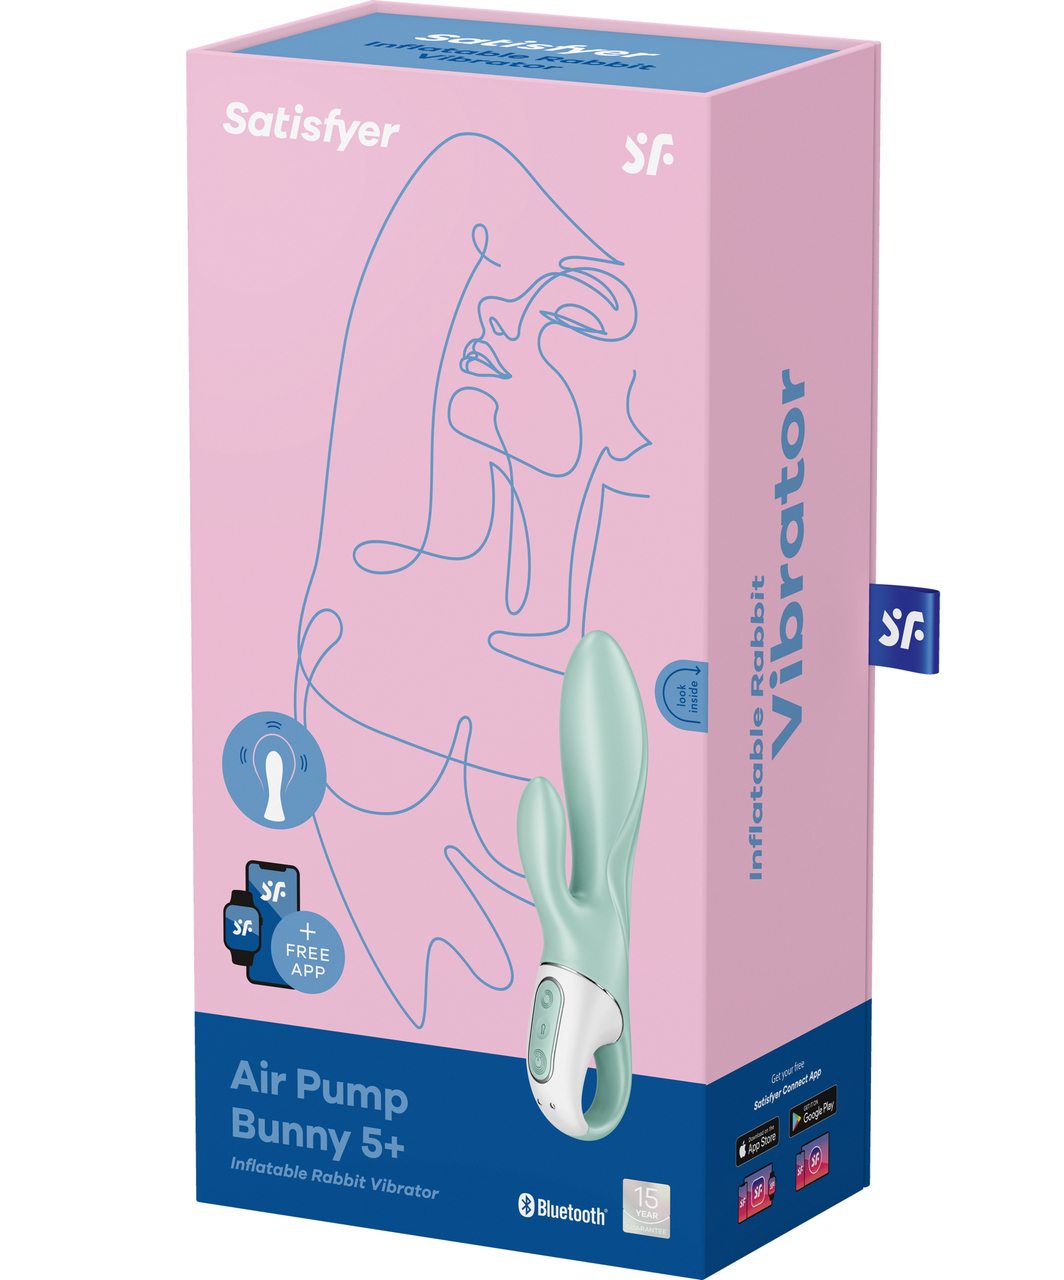 Satisfyer Air Pump Bunny 5+ vibrators